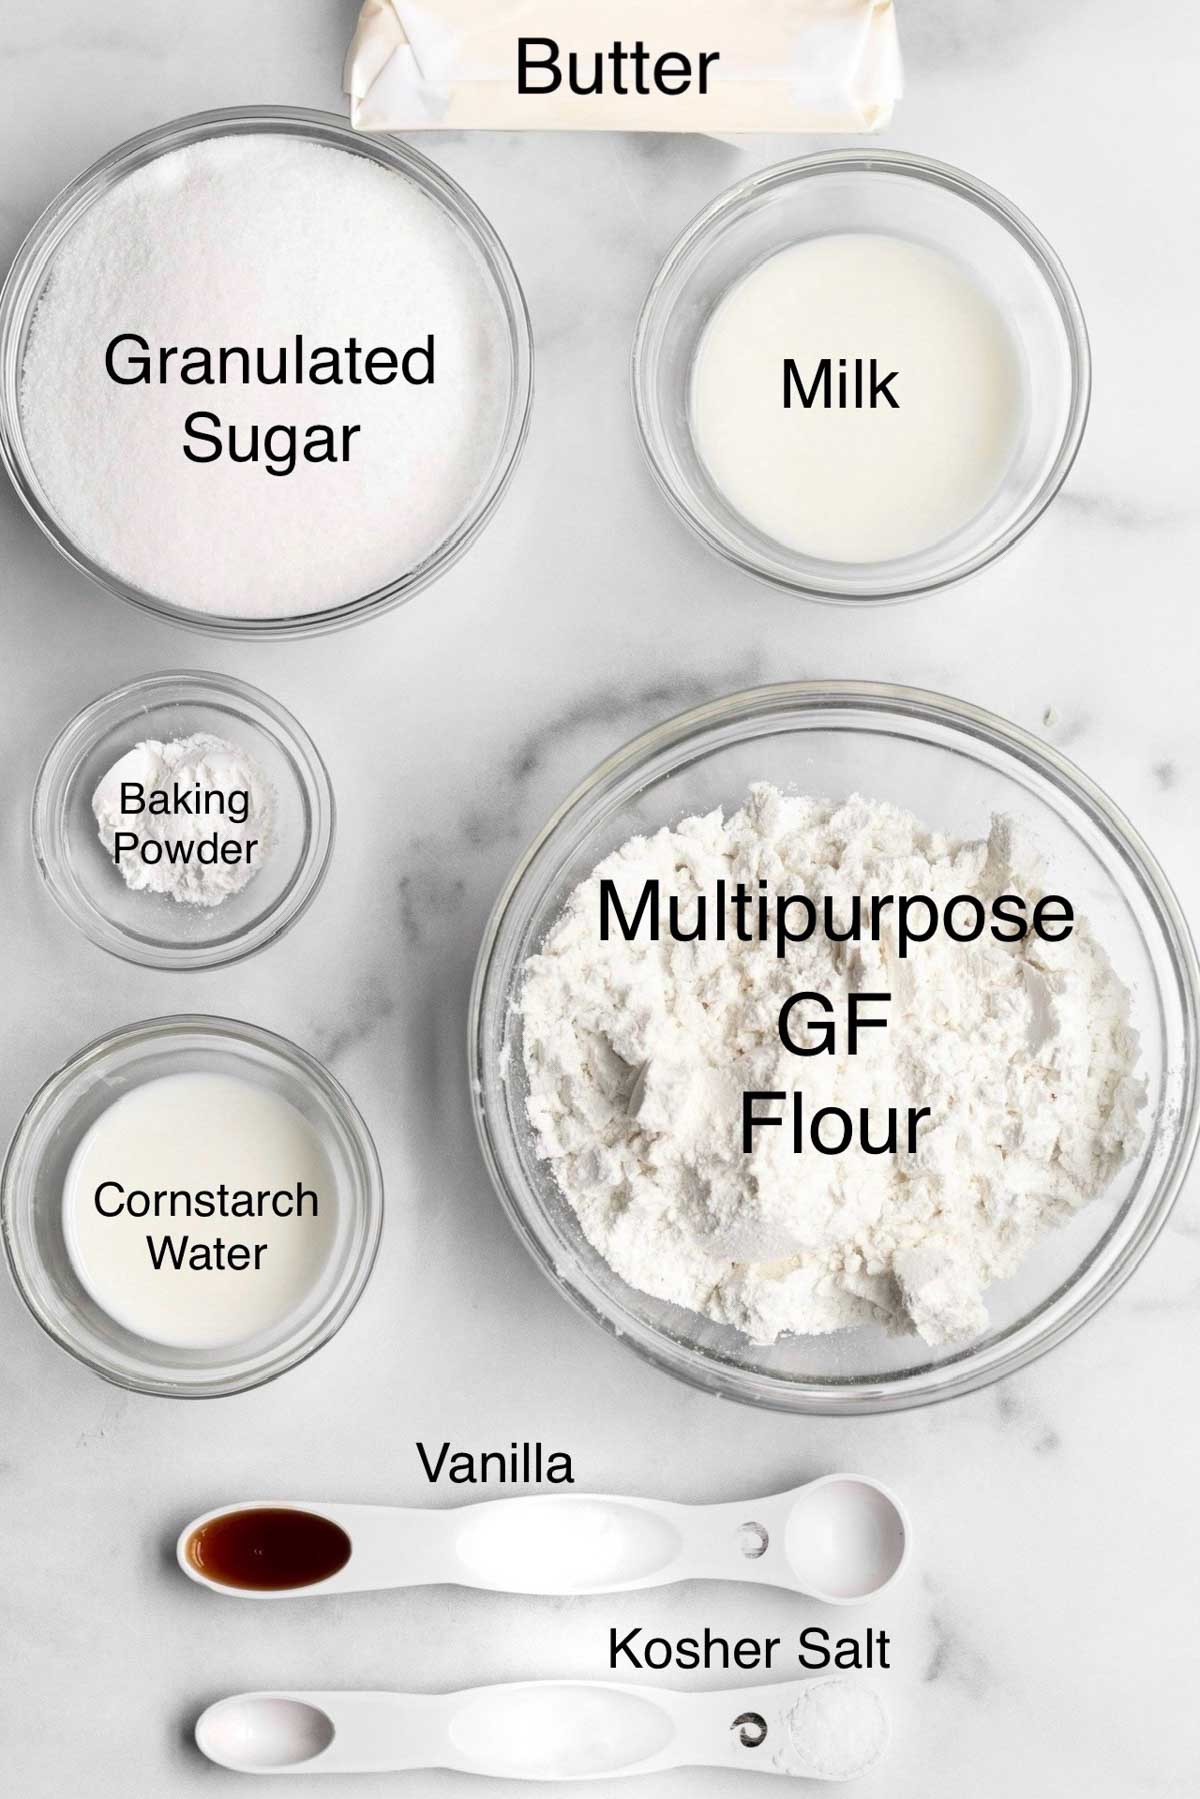 Separate containers of butter, granulated sugar, milk, baking powder, multipurpose gluten free flour, cornstarch water, vanilla and kosher salt.